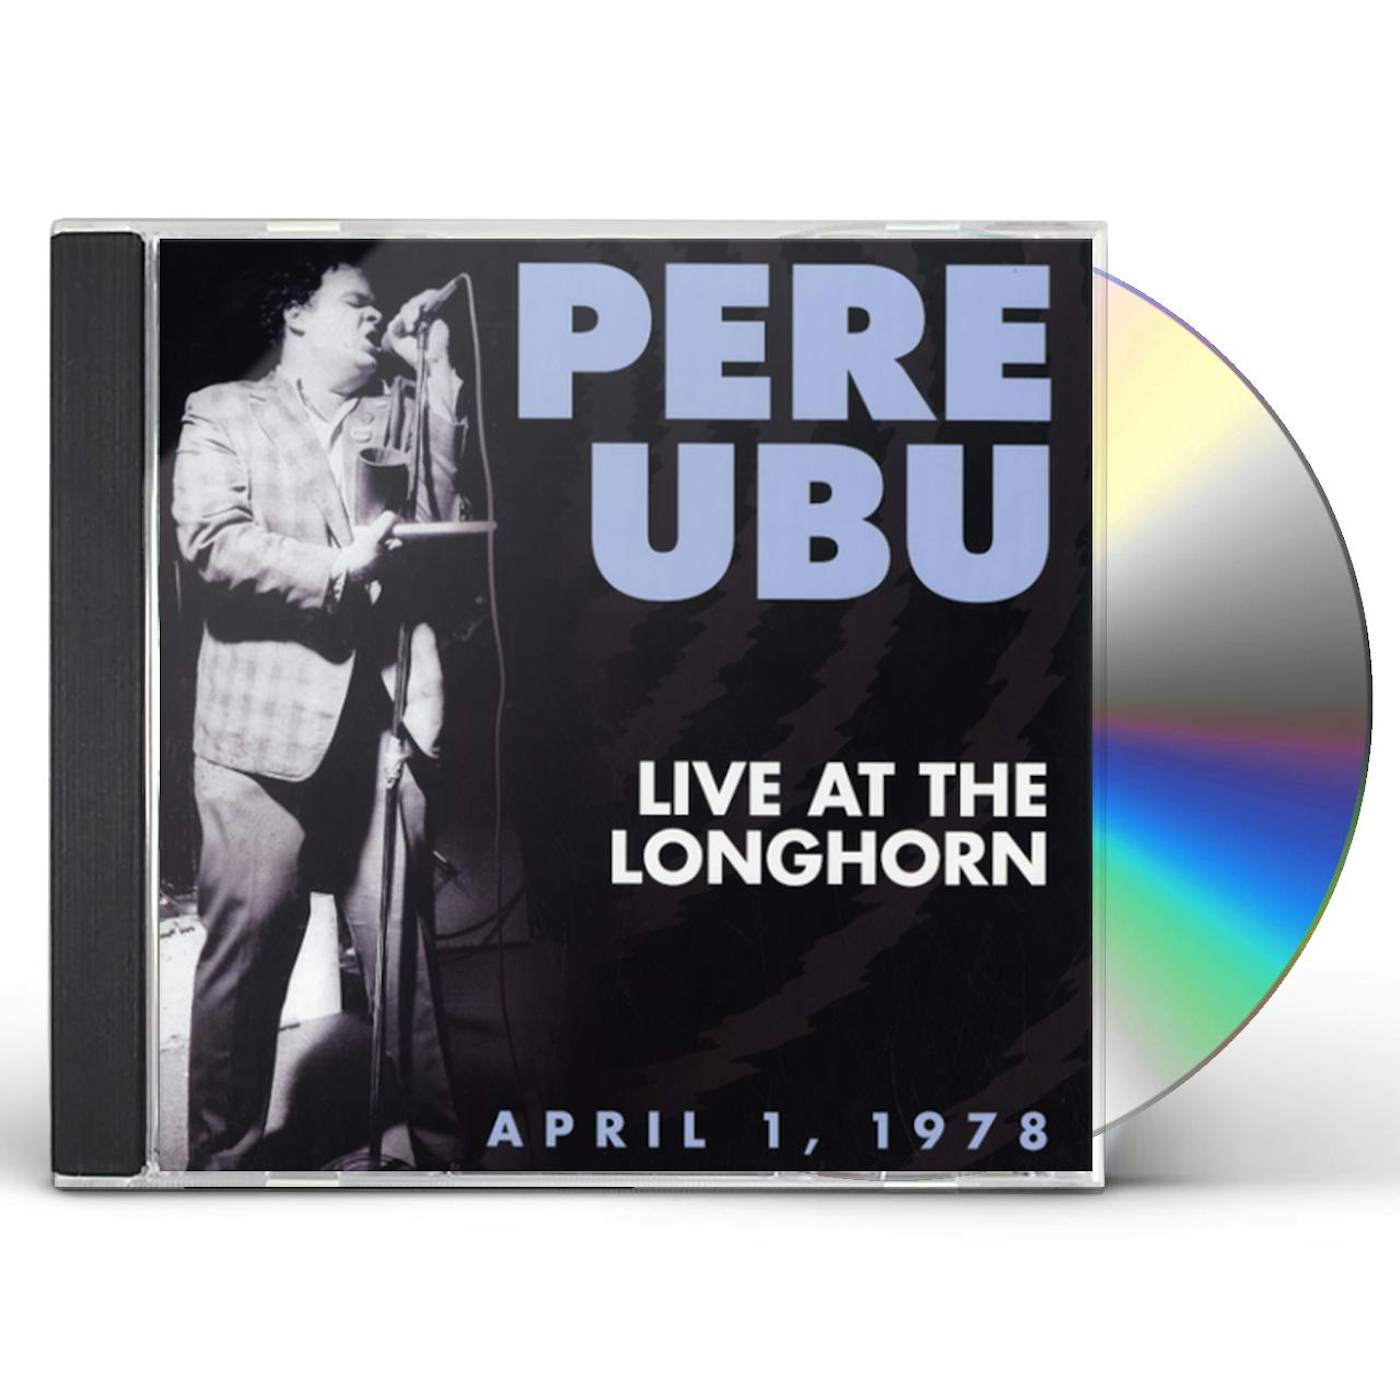 Pere Ubu LIVE AT THE LONGHORN - APRIL 1, 1978 CD